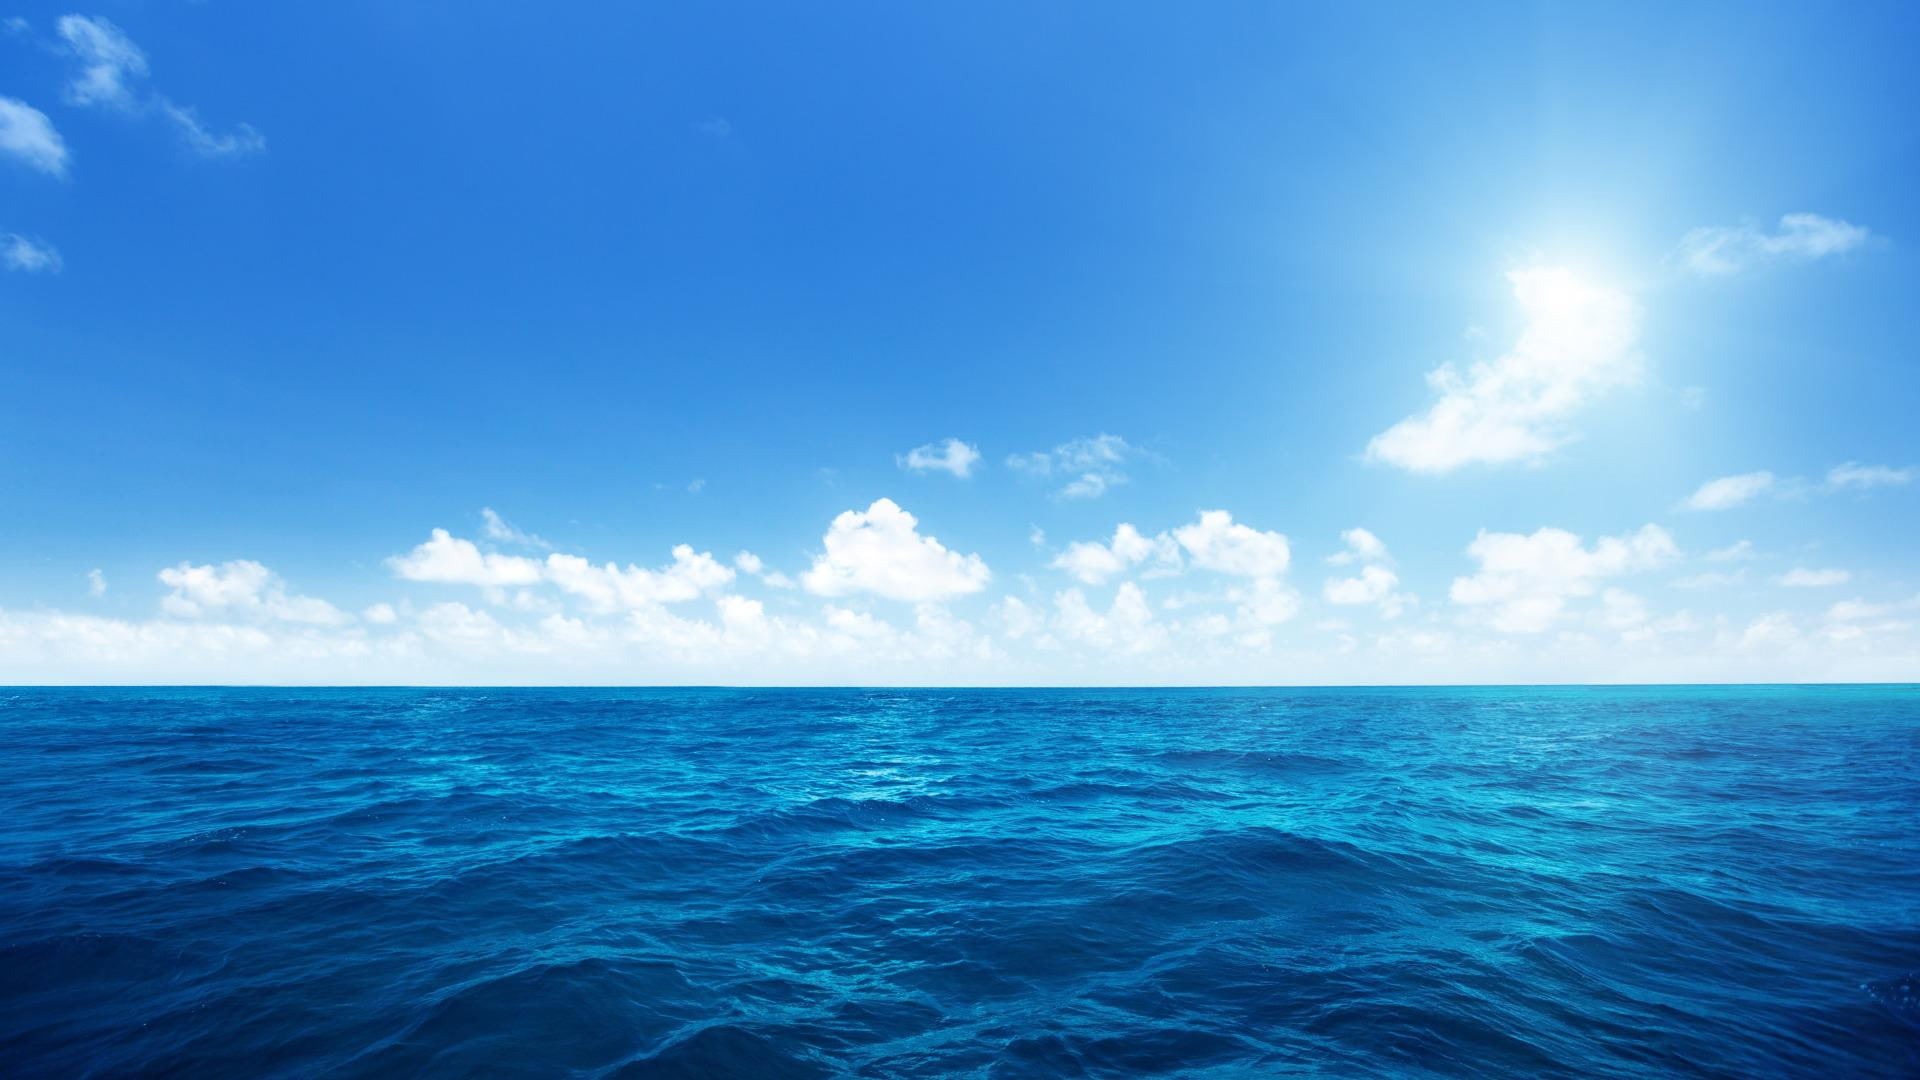 Blue sea, sea, blue sky, white clouds, ocean scenery